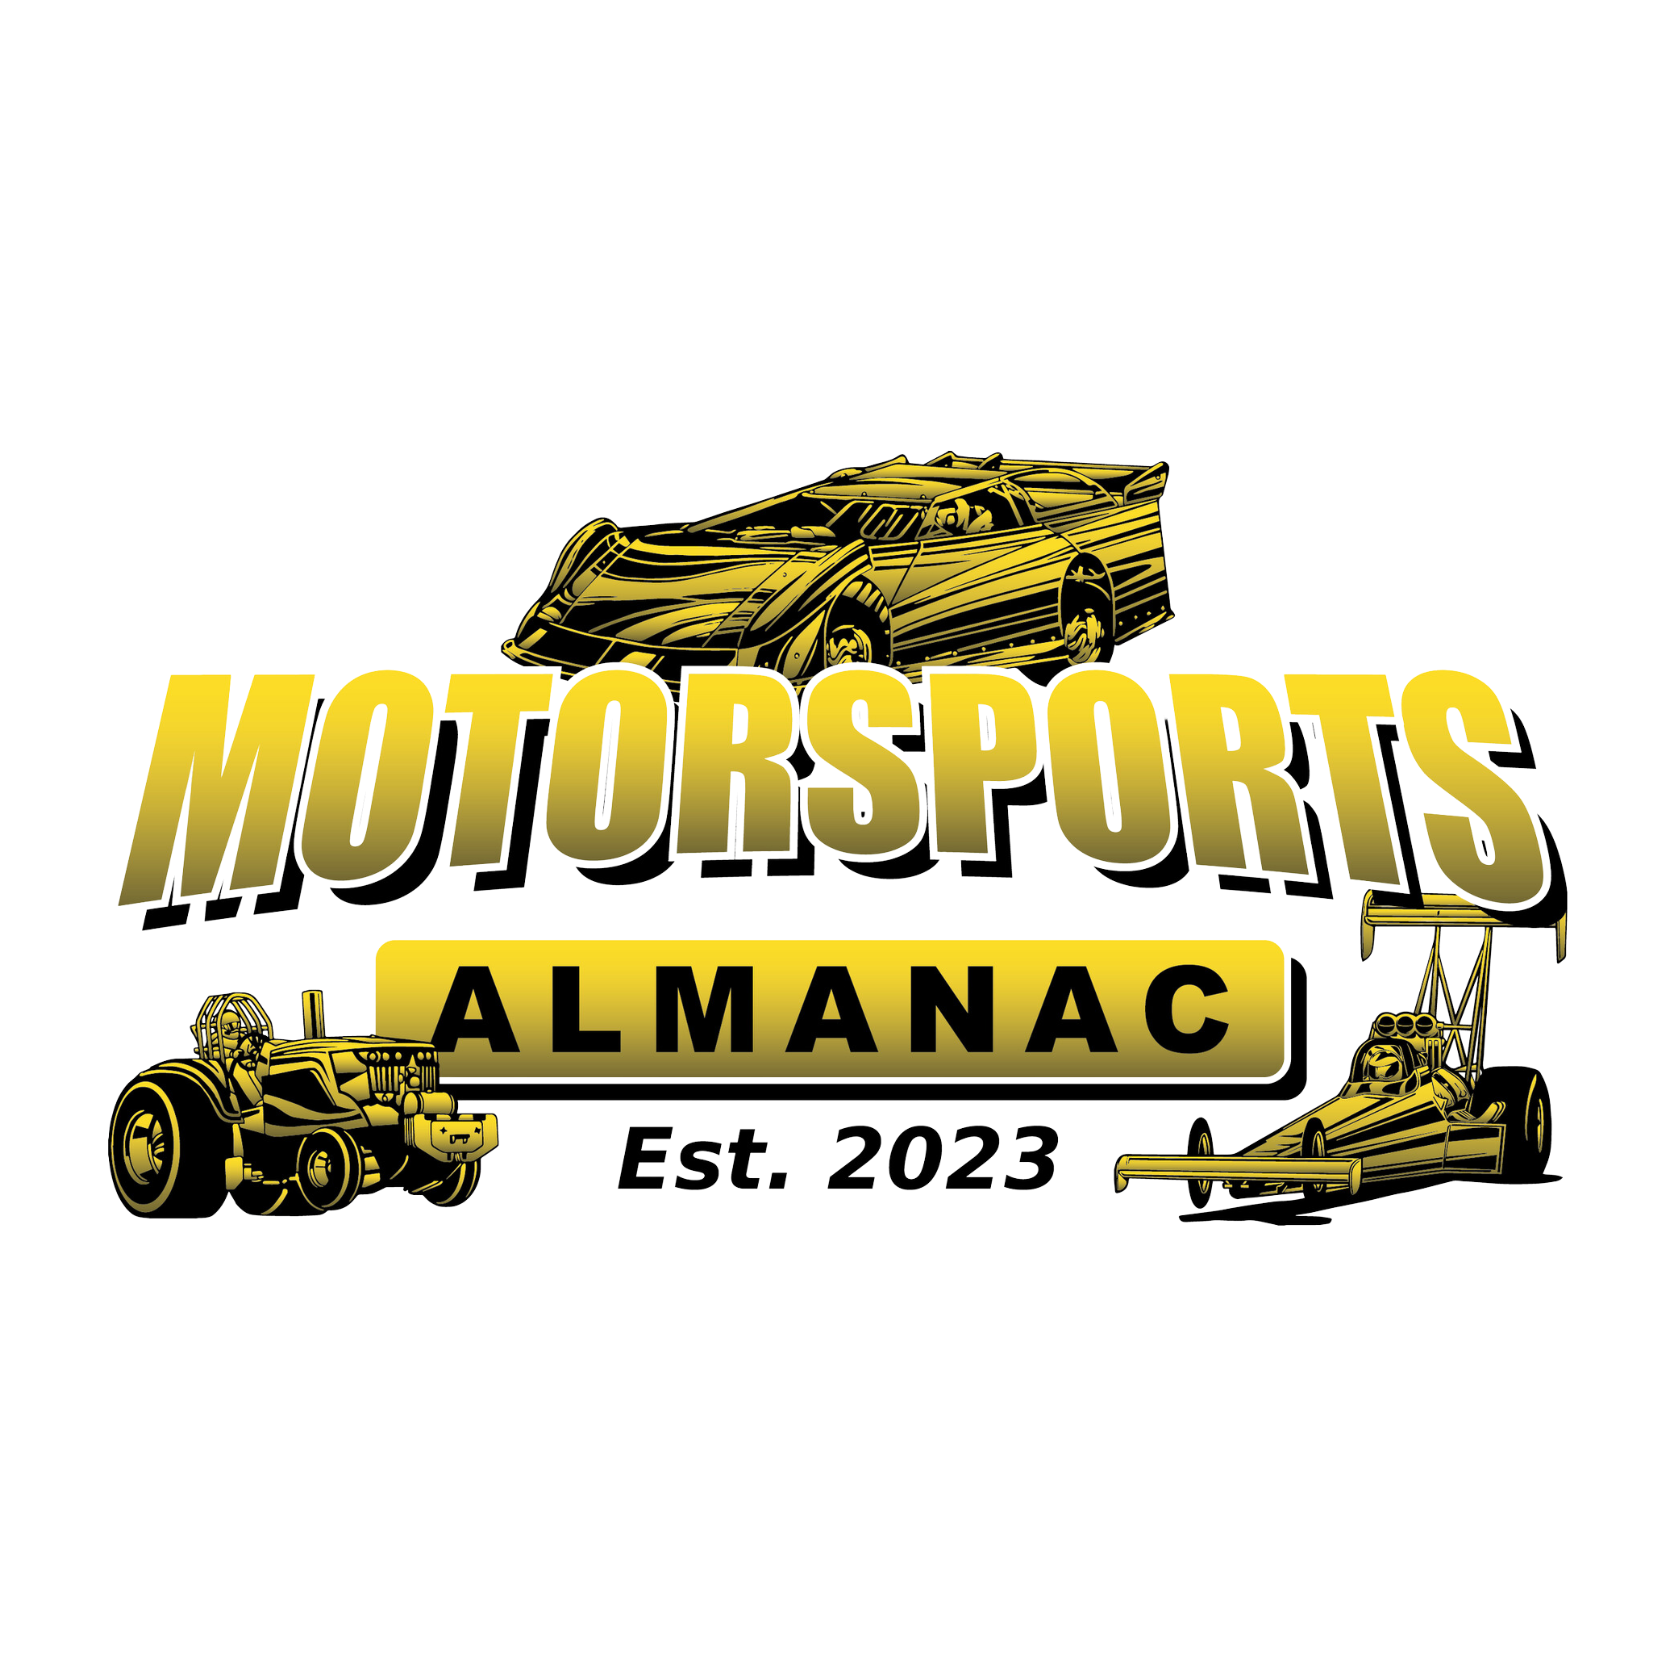 The Motorsports Almanac